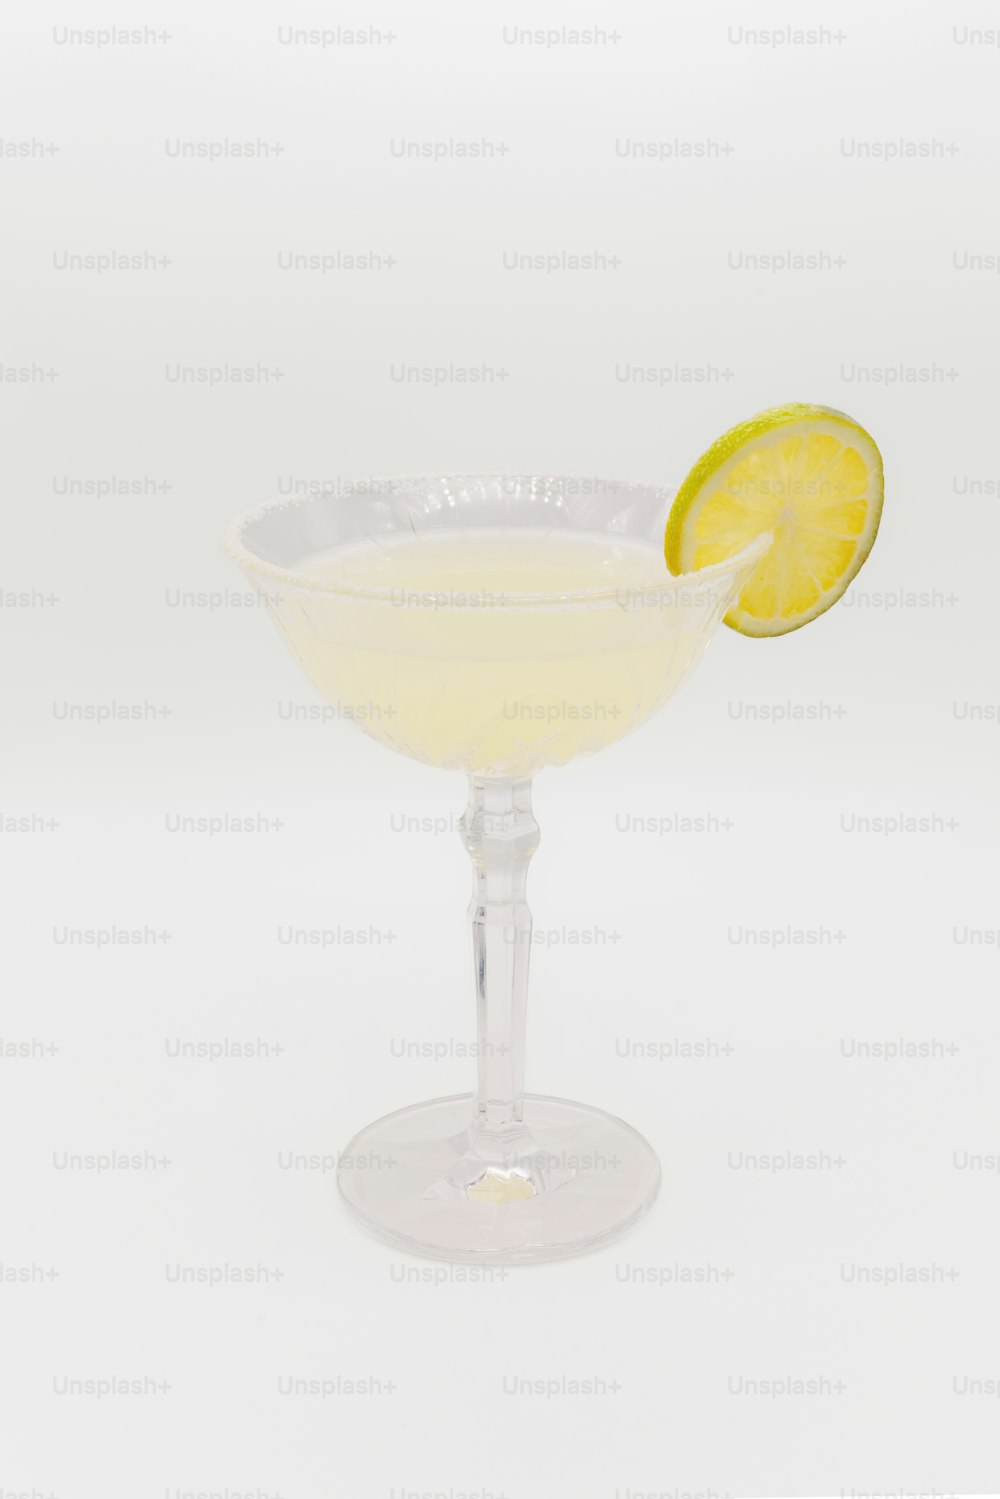 a glass with a lemon slice on top